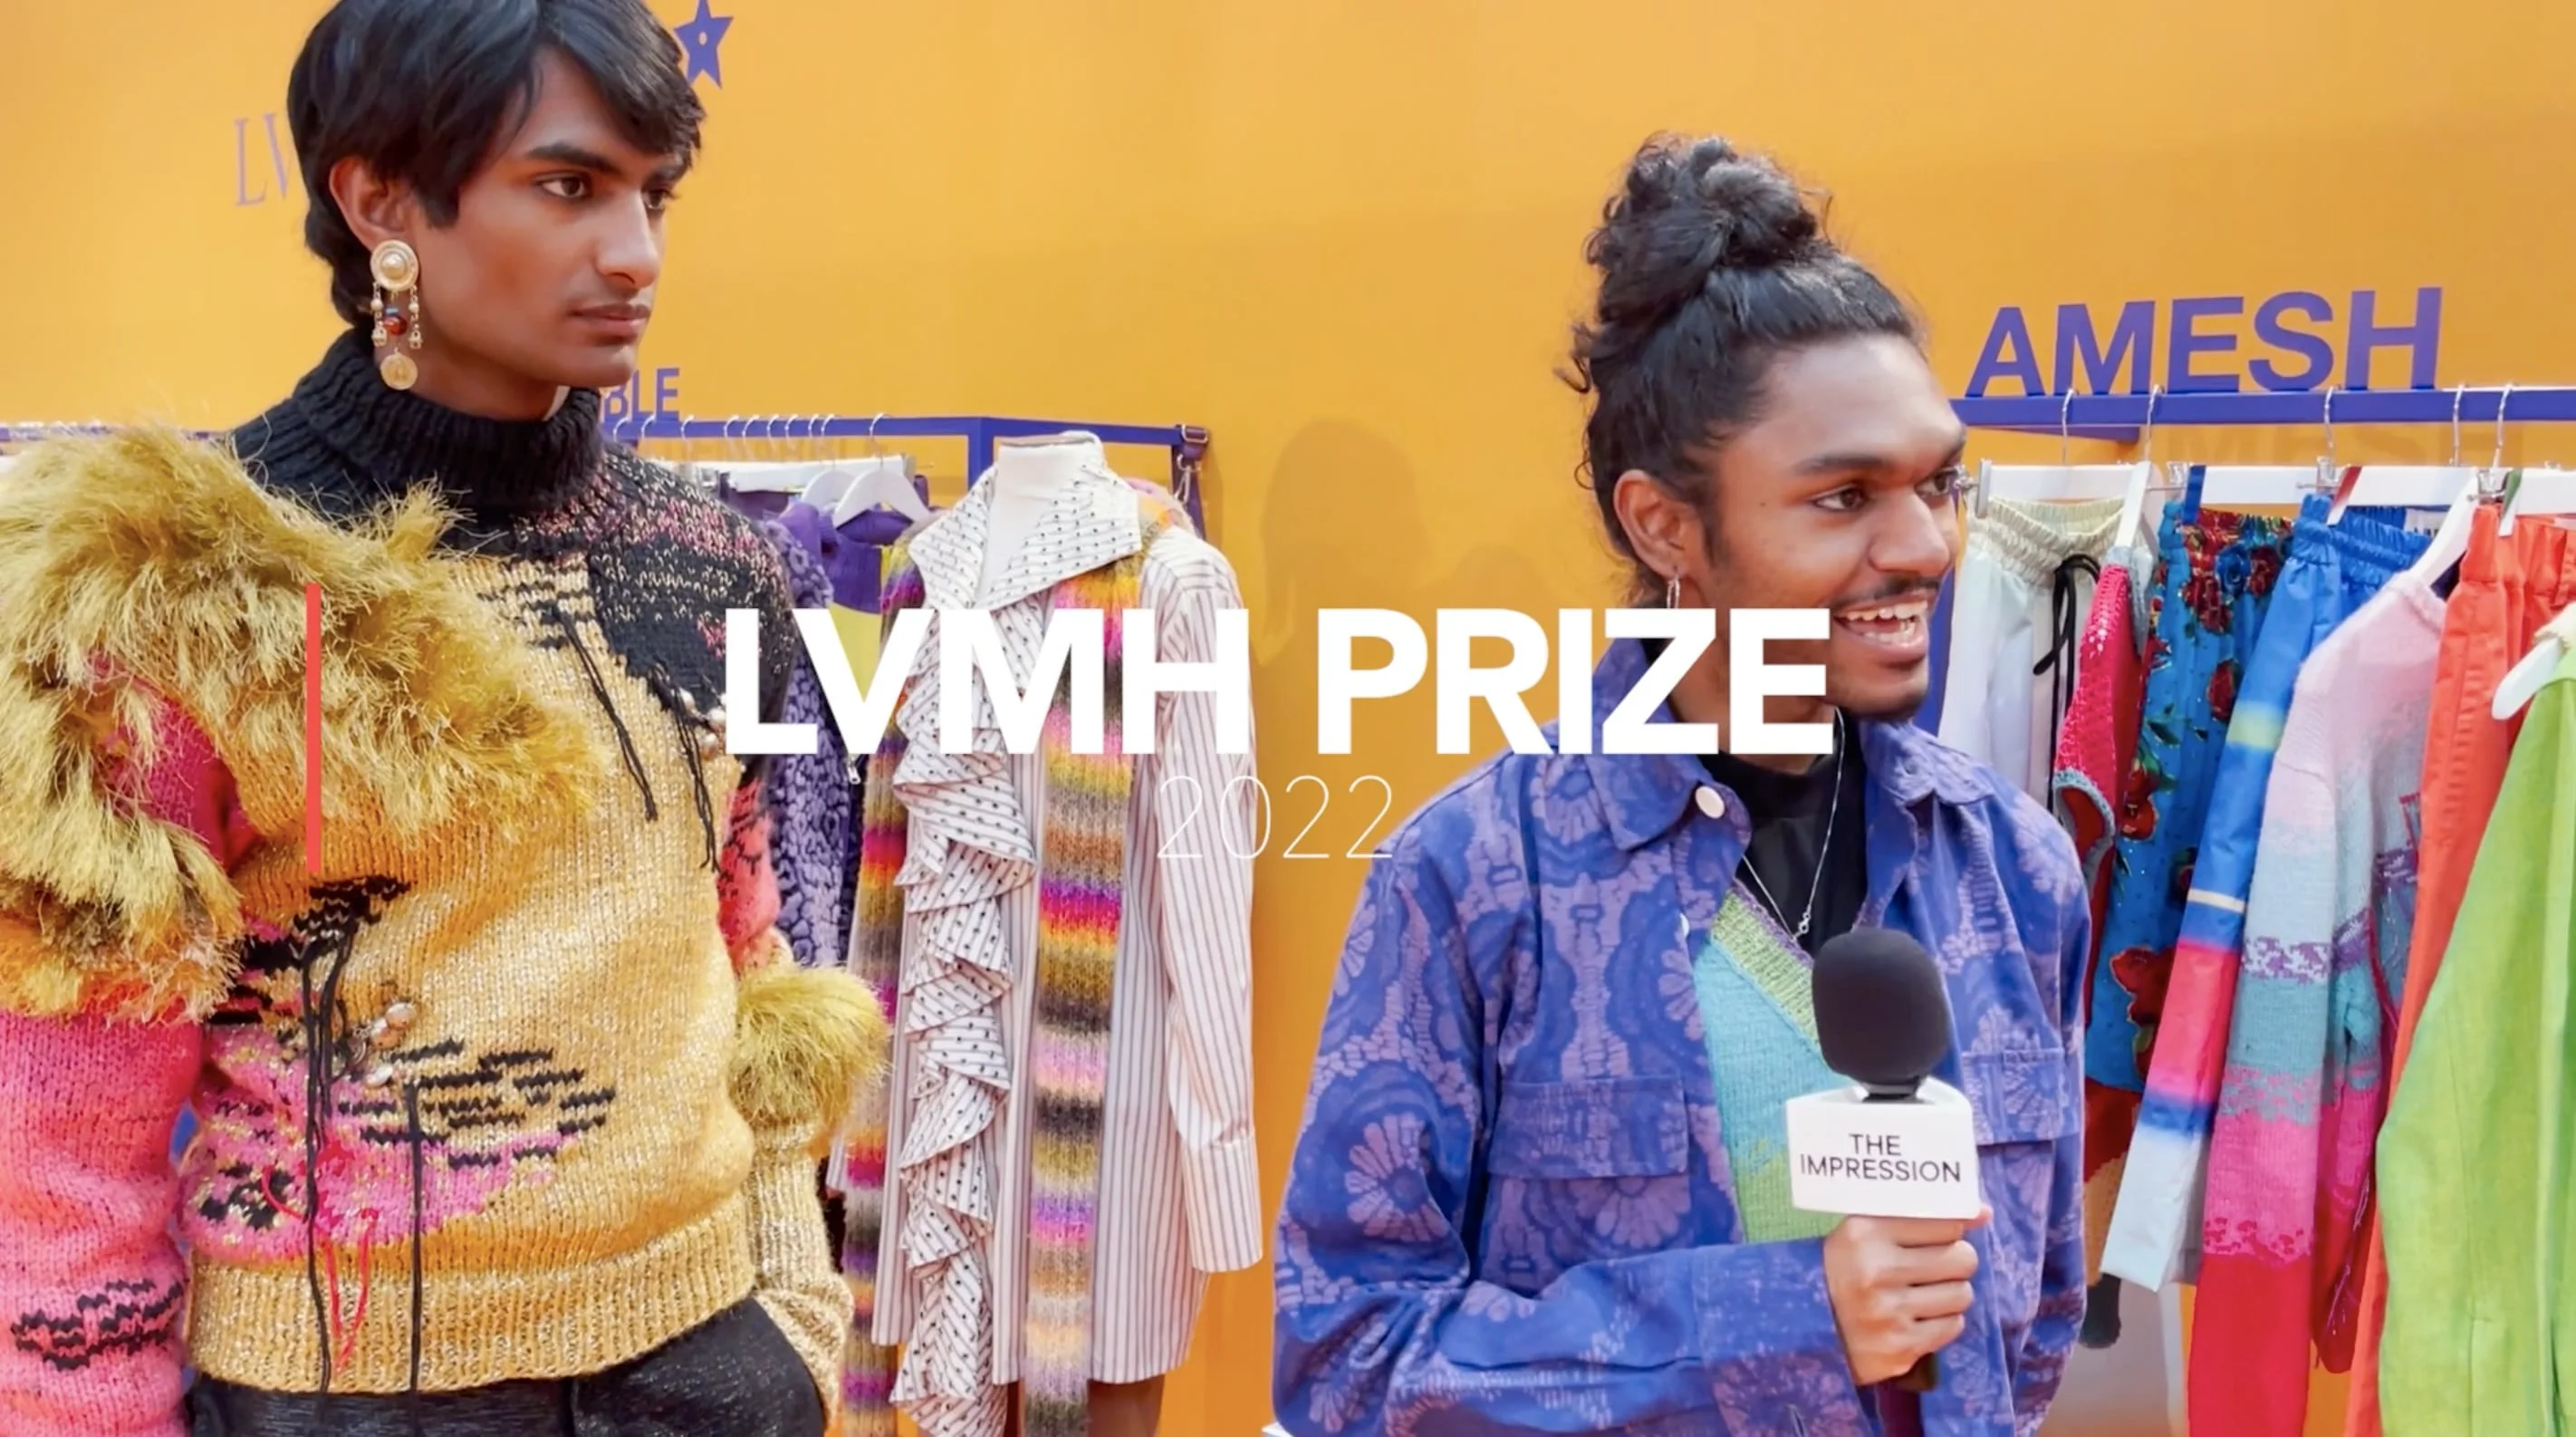 Amesh Wijesekera of Amesh - LVMH Prize 2022 Semi Finalist Interview on Vimeo